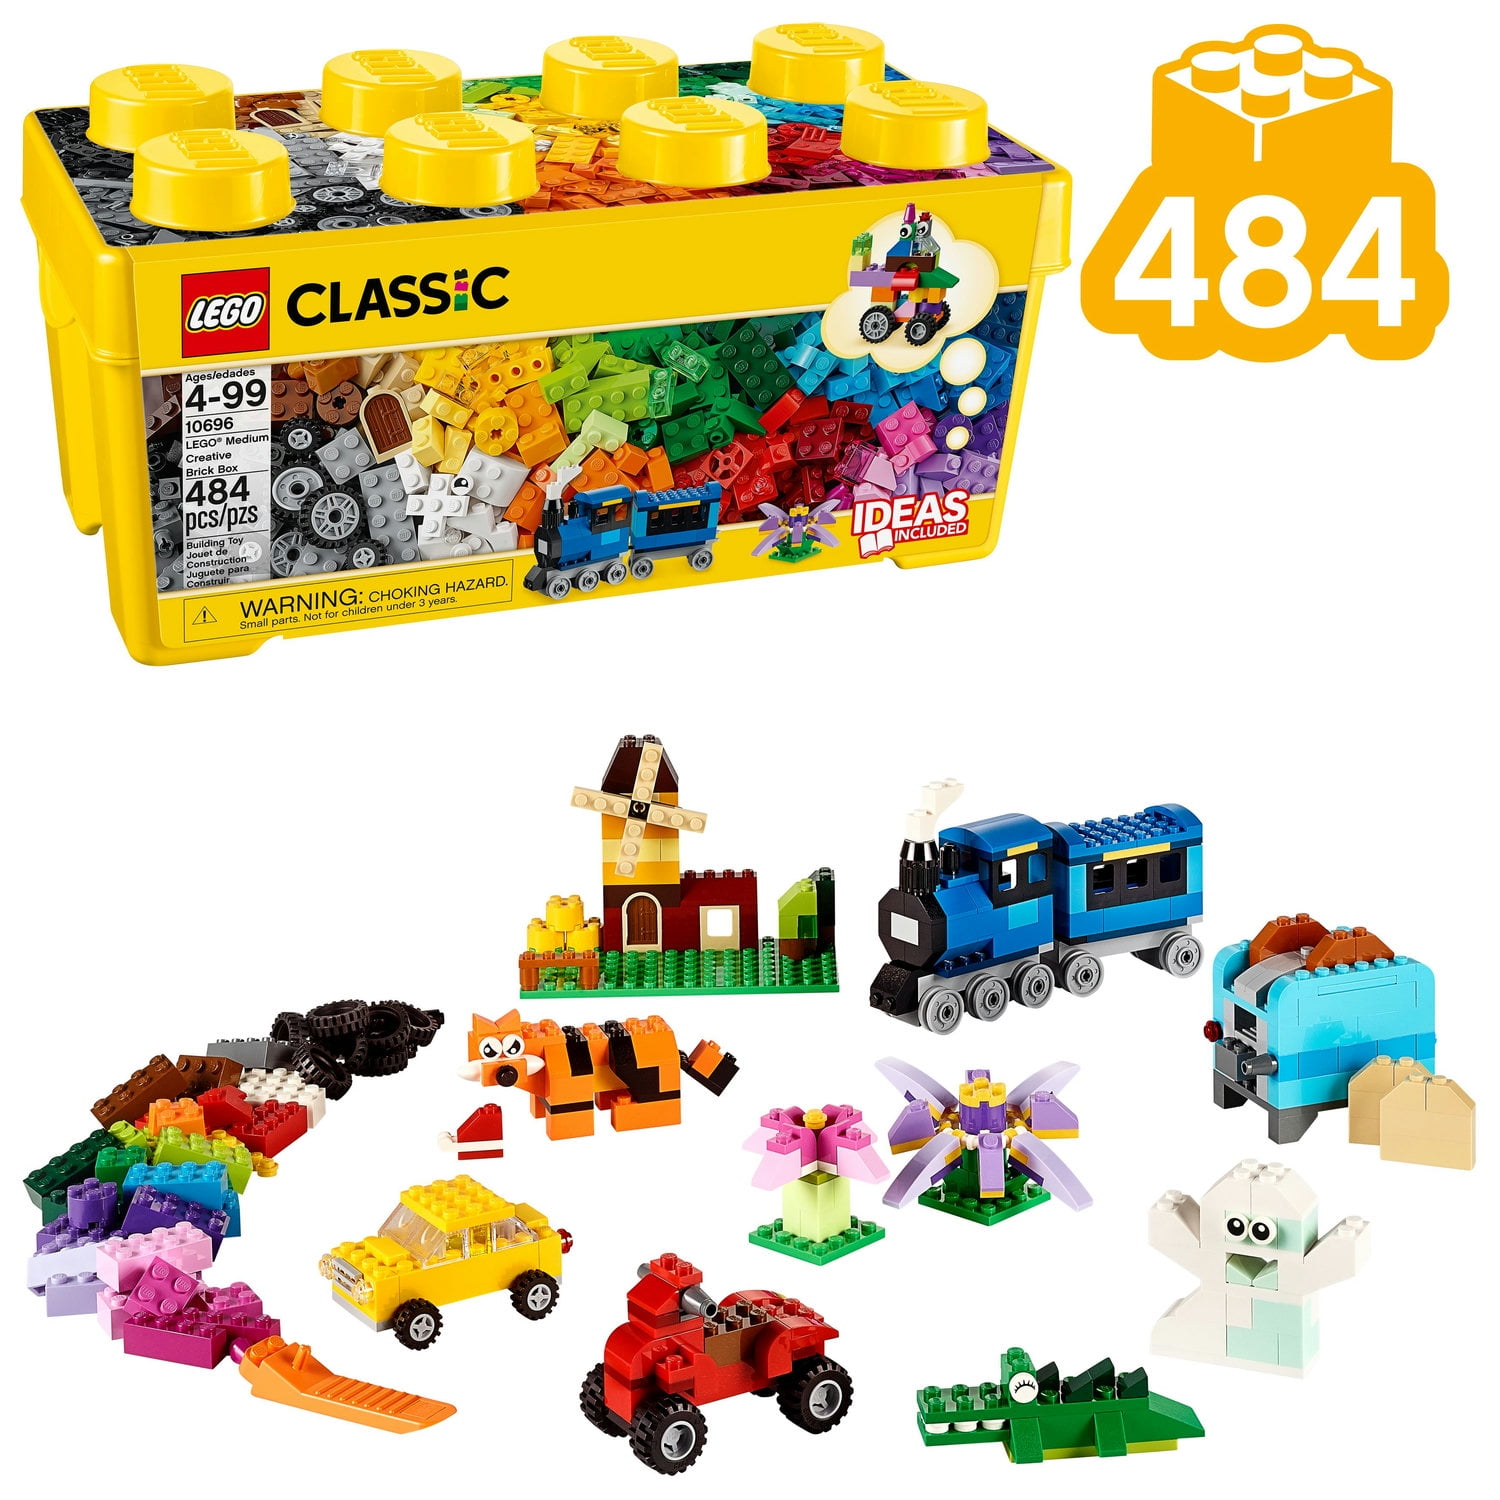 New LEGO CLASSIC 1500 Pieces Set # 10697 Large Creative Box Ideas